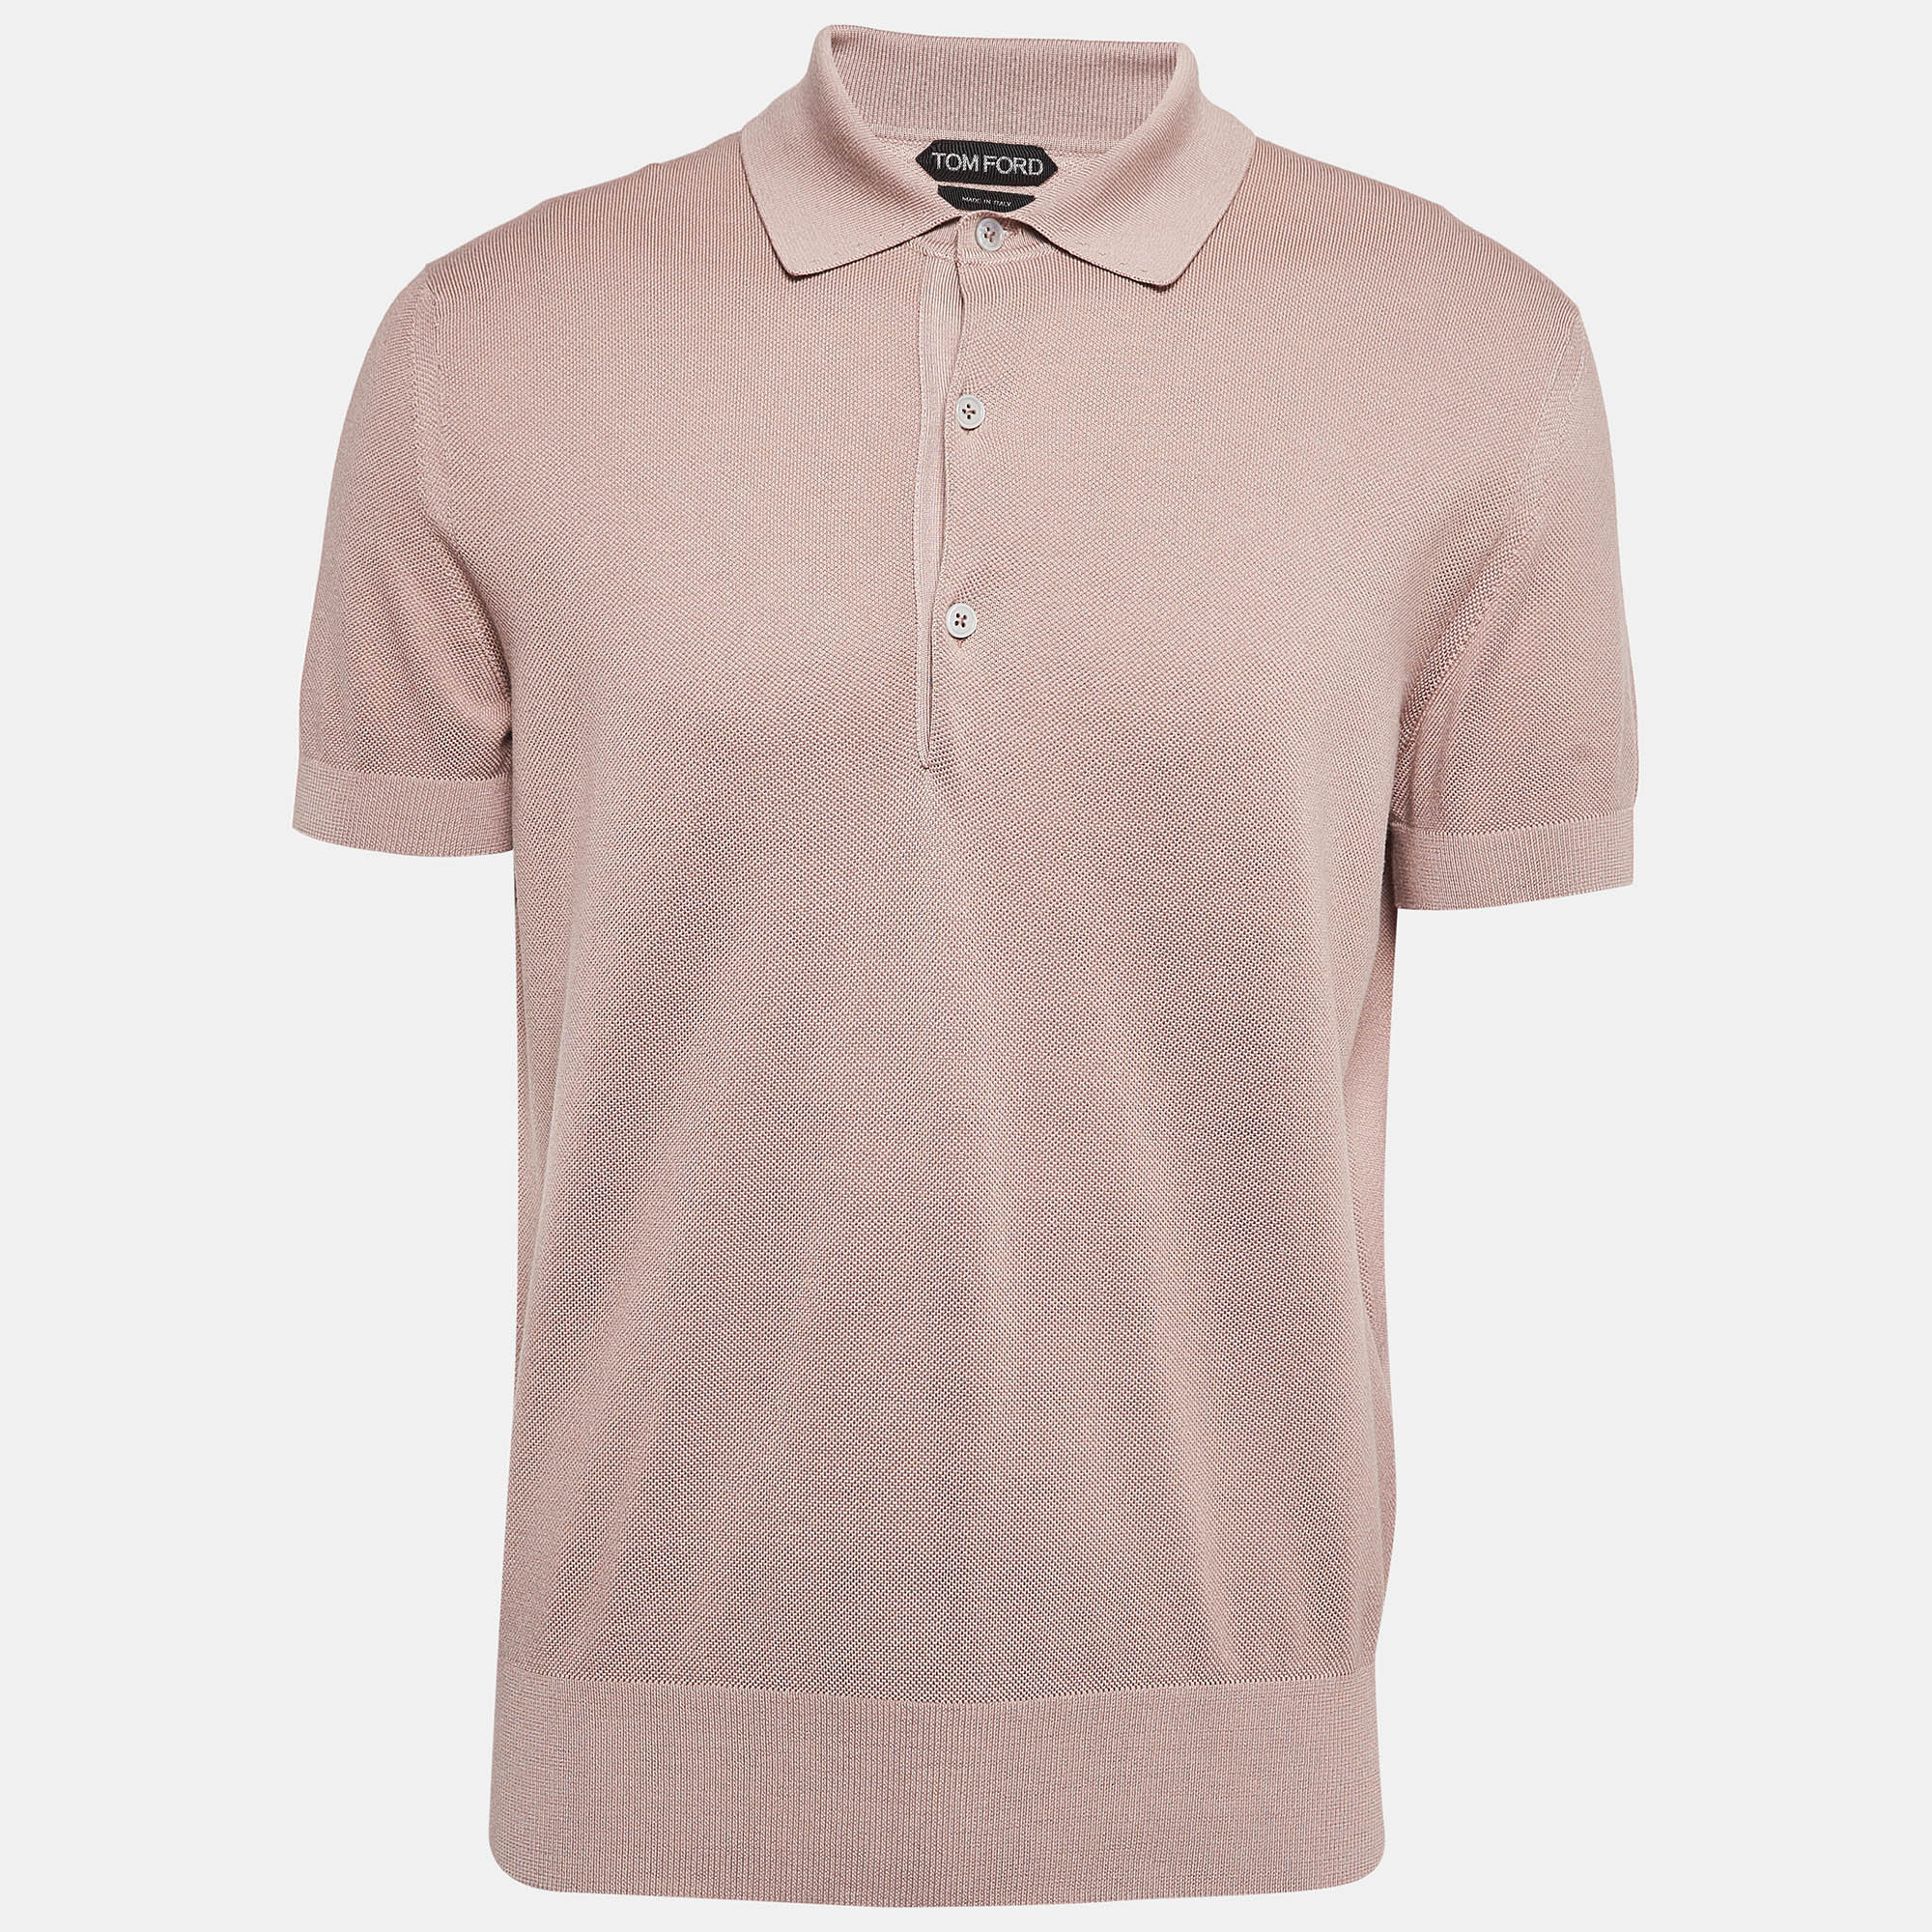 

Tom Ford Pink Cotton Pique Polo T-Shirt XL